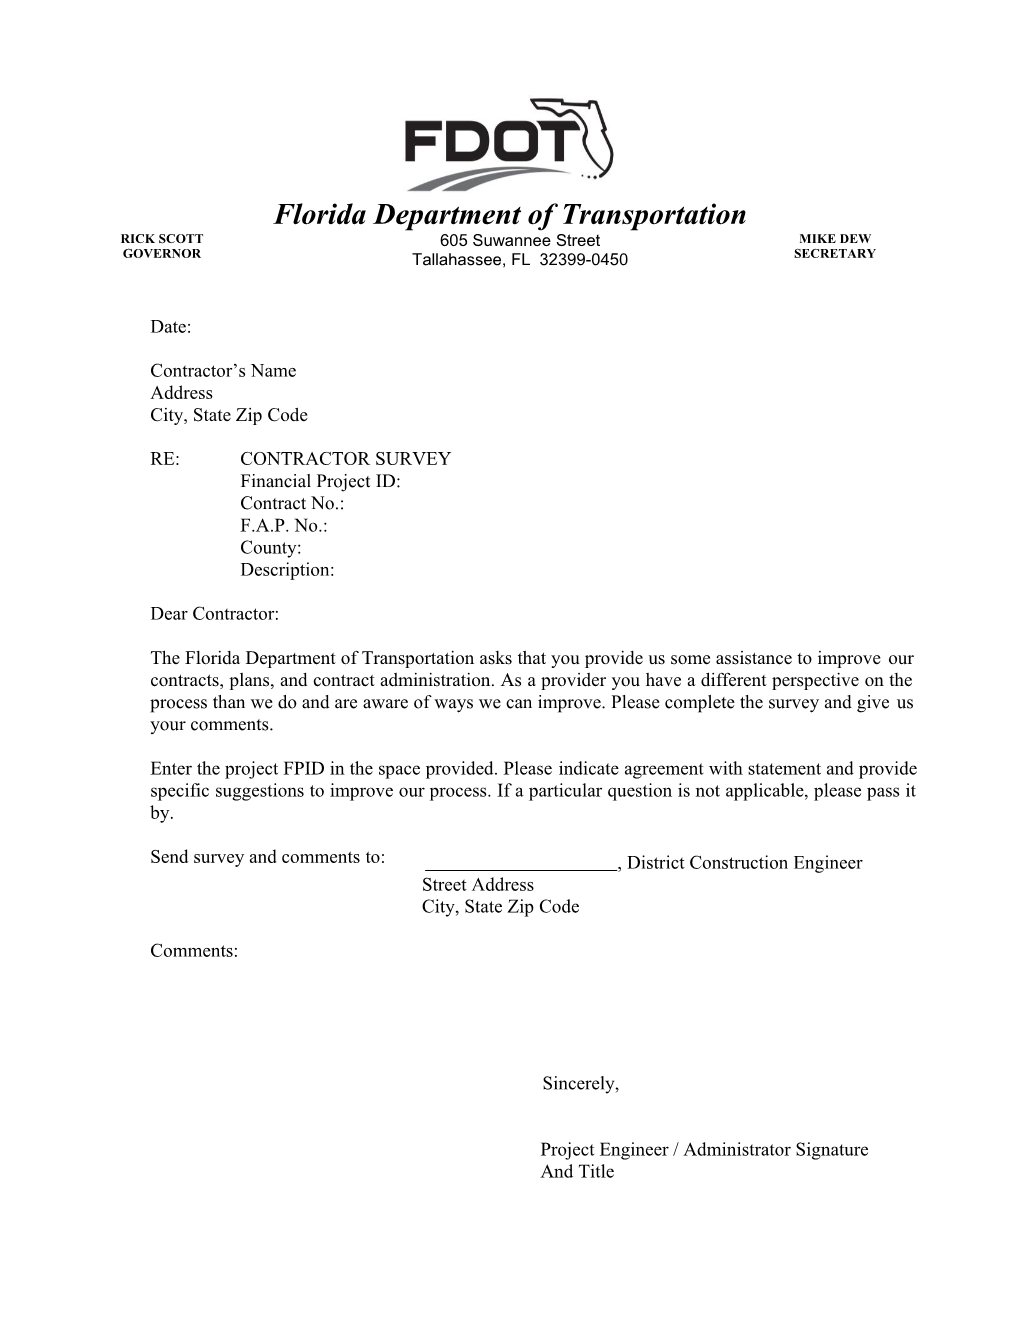 Florida Department Oftransportation